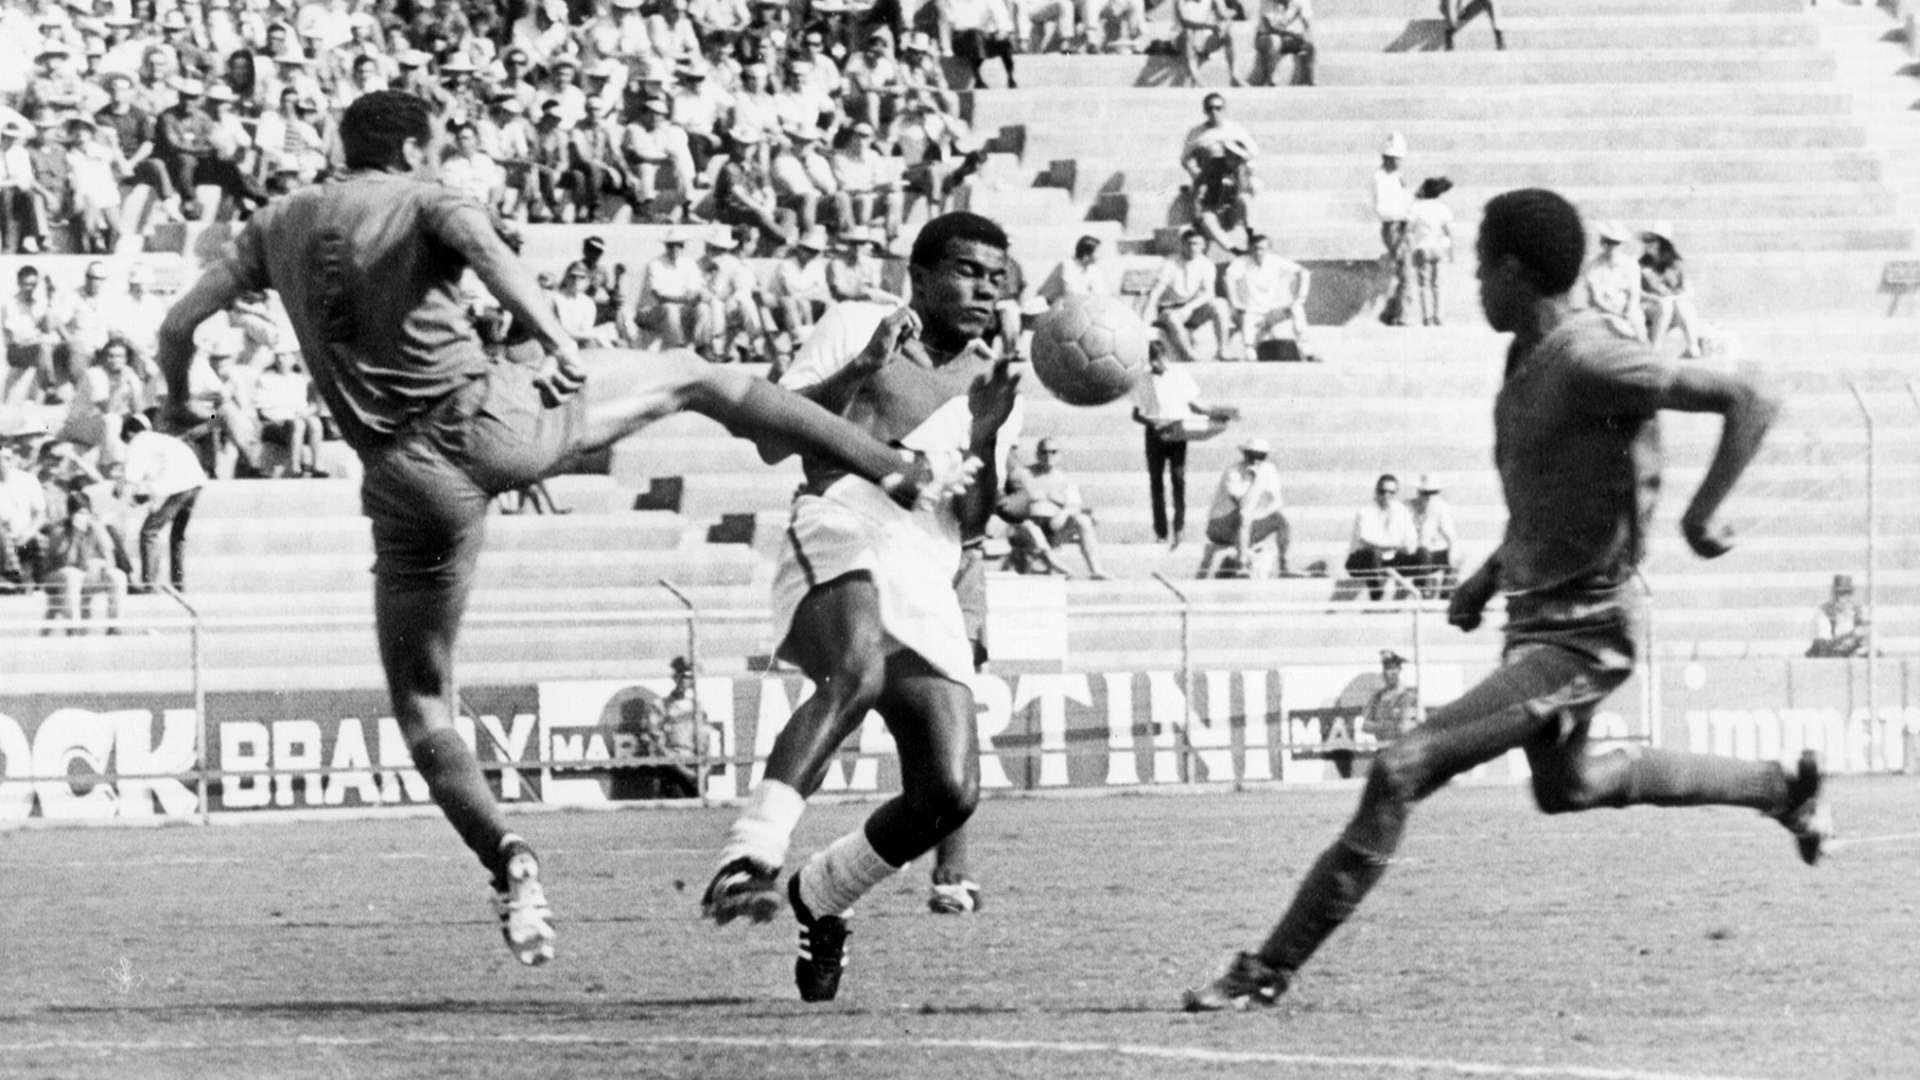 Teofilo Cubillas Peru Morocco World Cup 1974